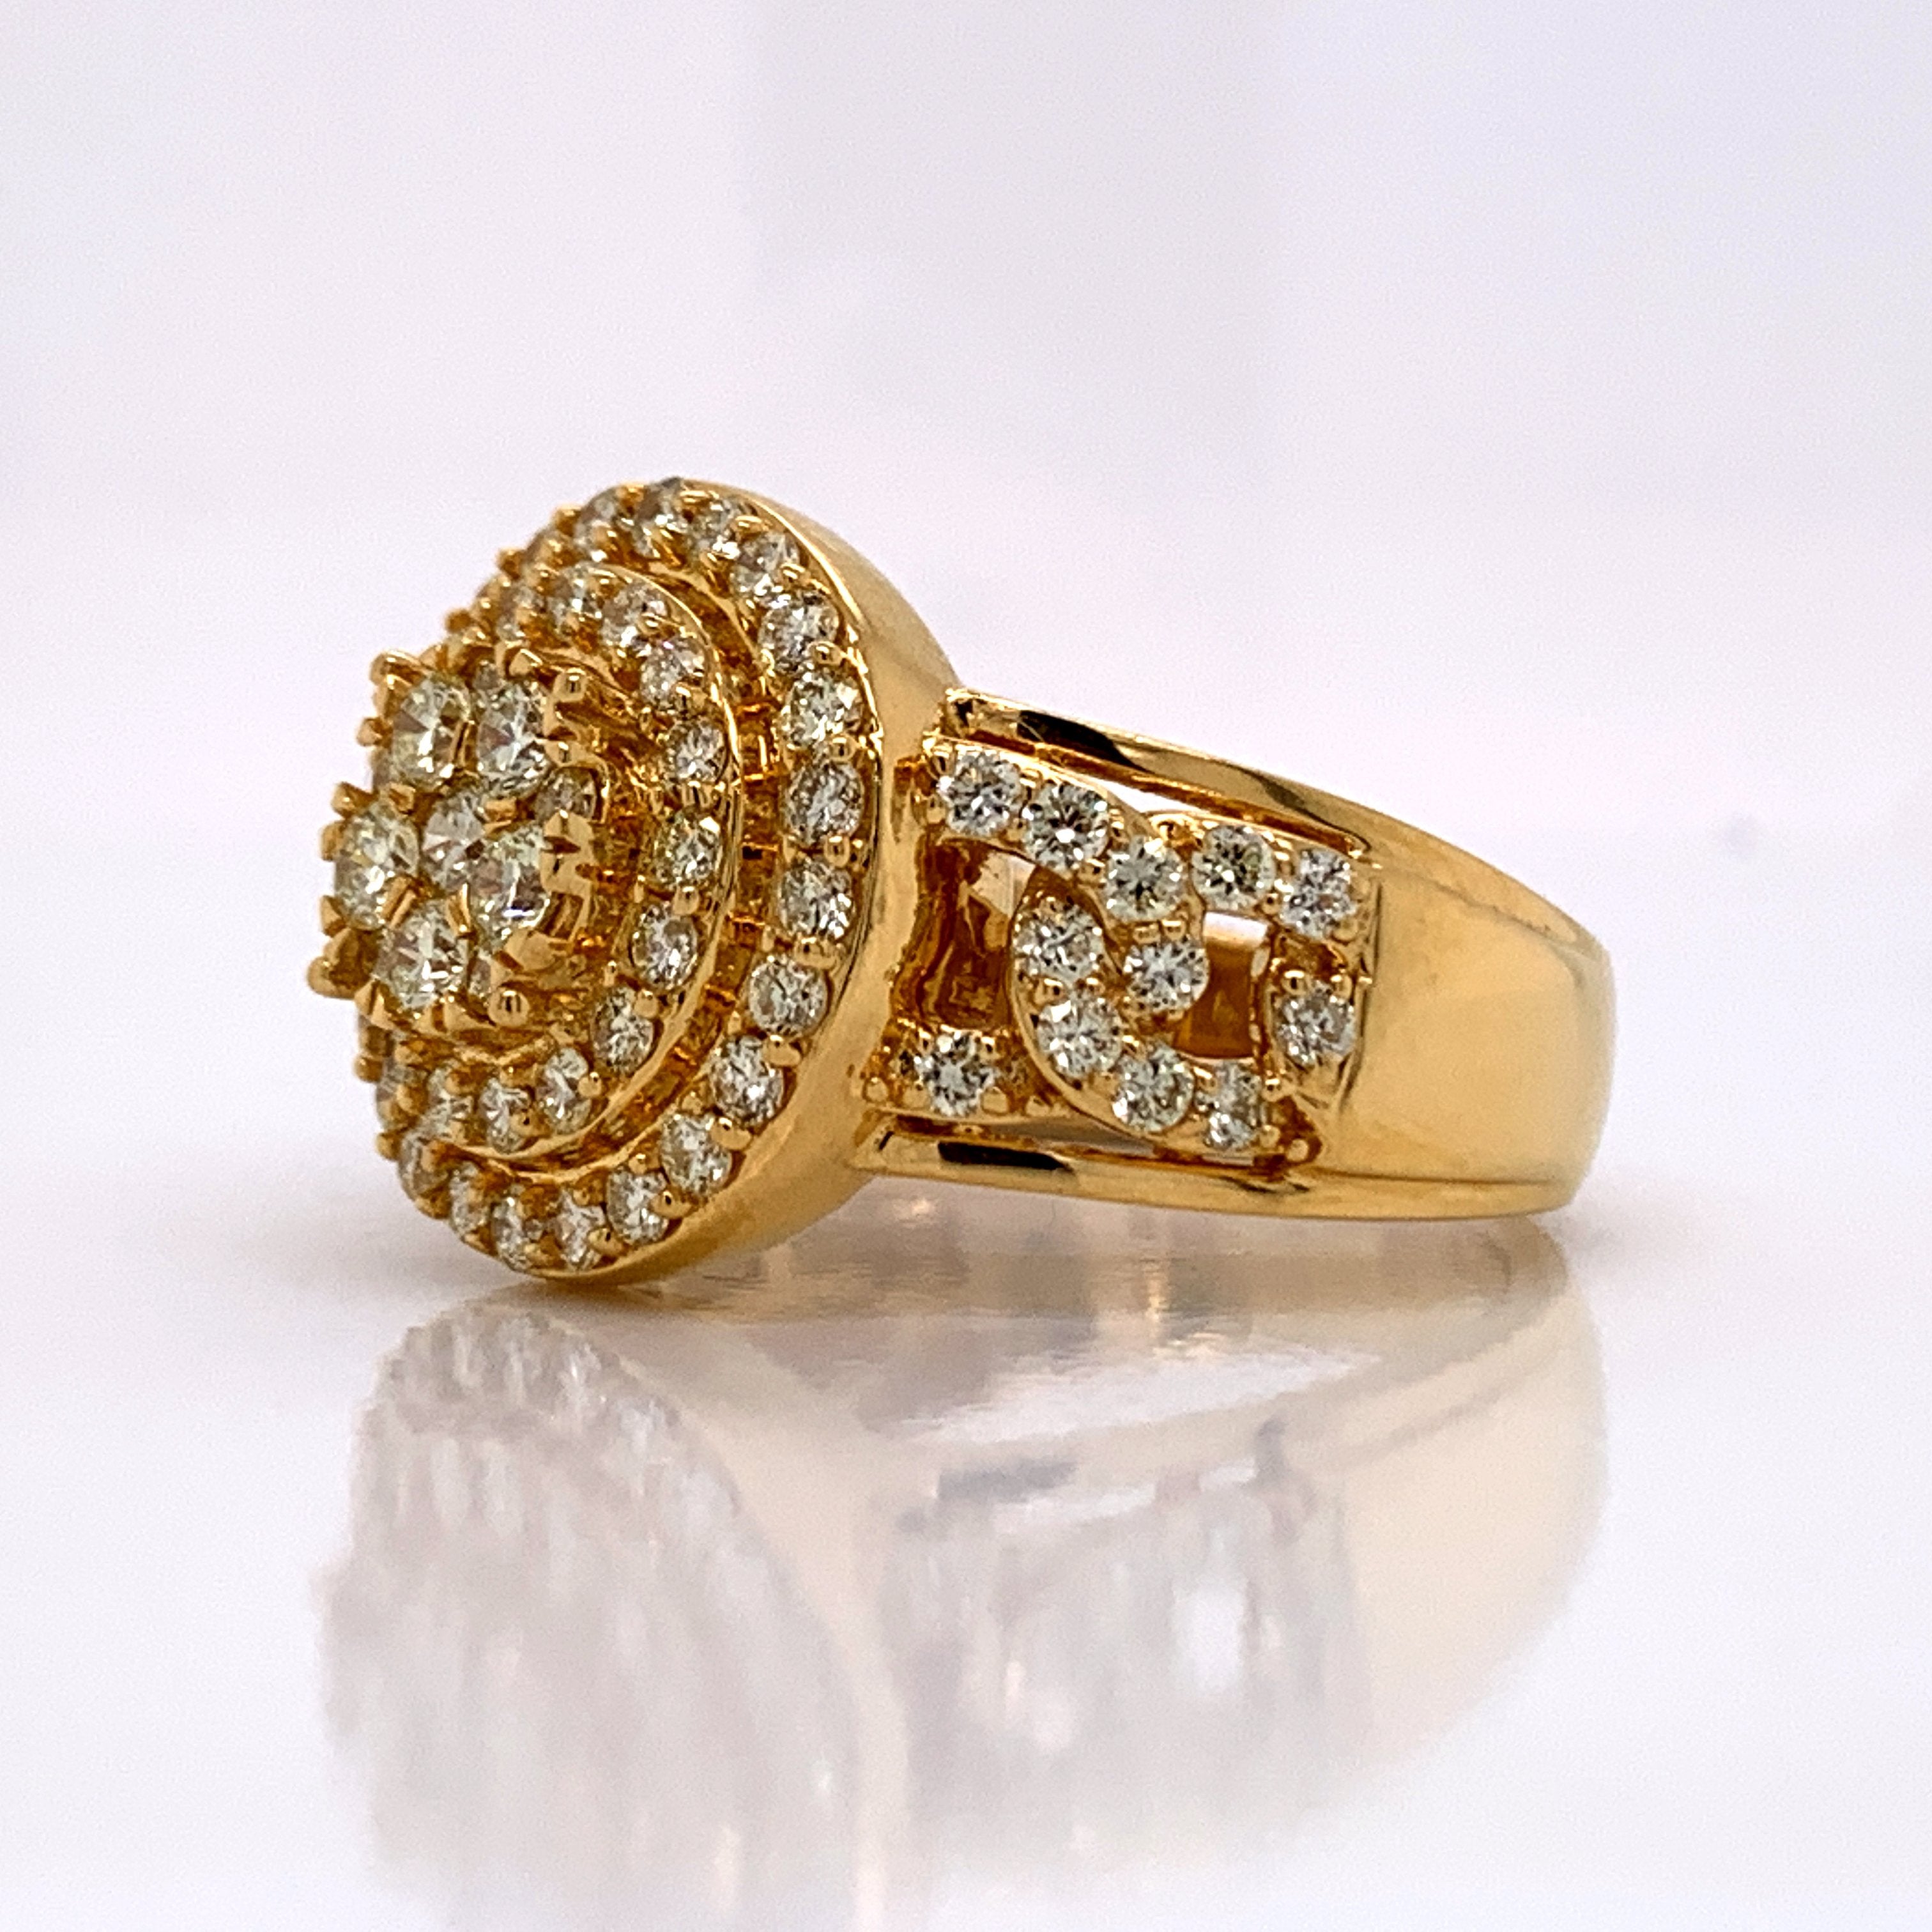 1.80CT Diamond 10K Gold Ring - White Carat Diamonds 